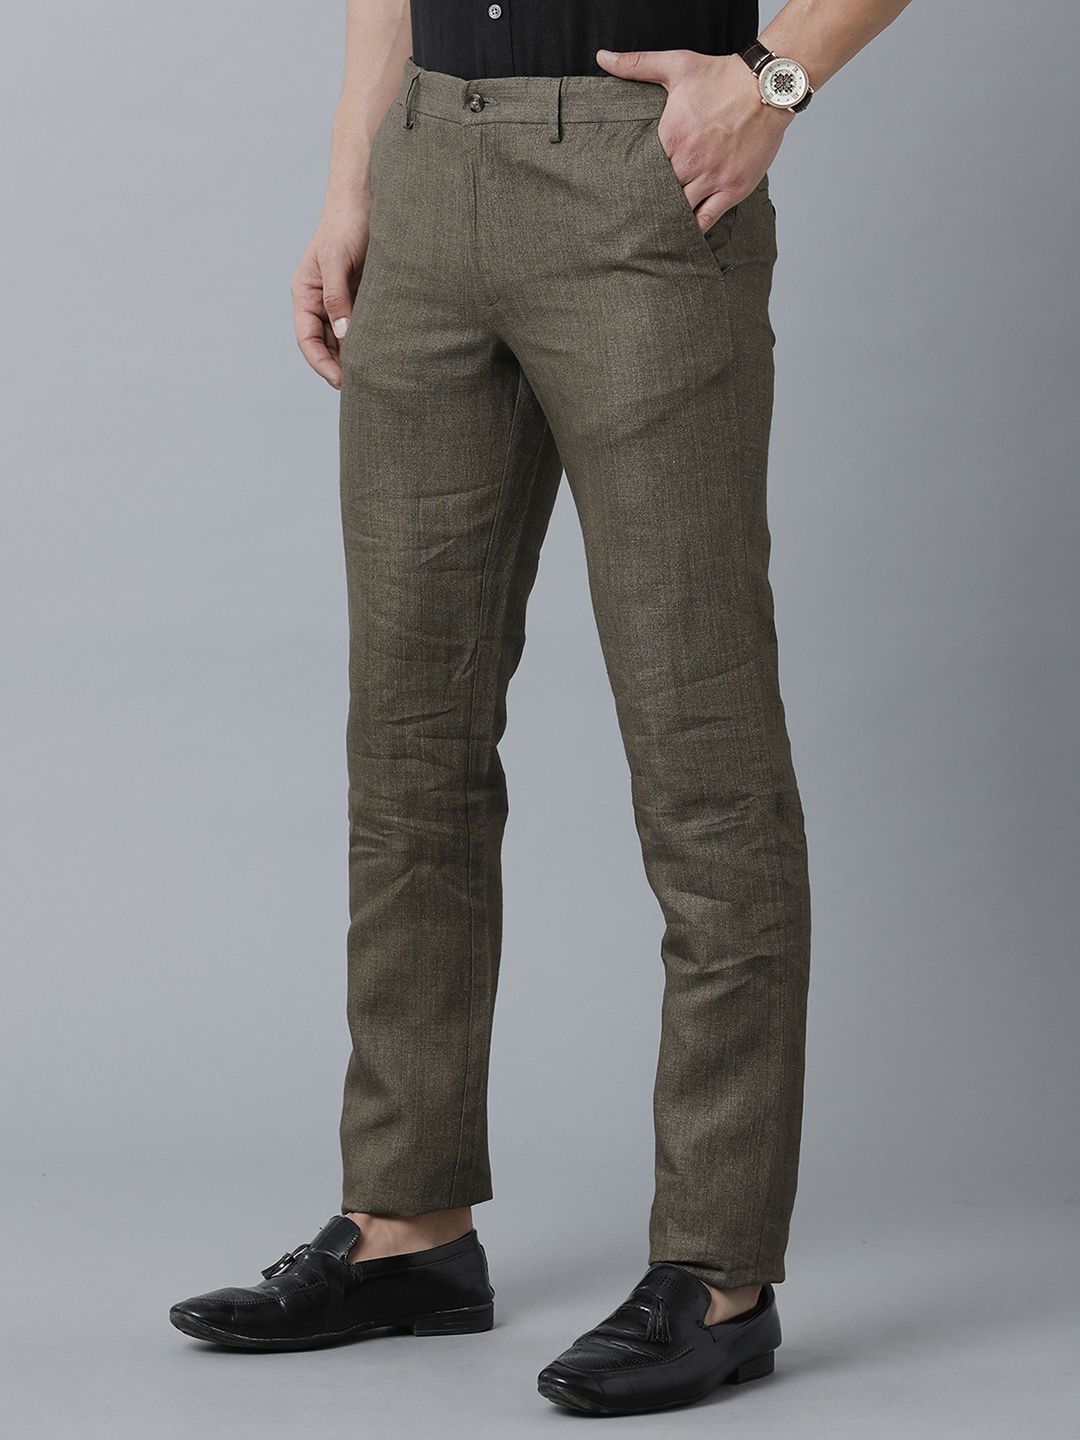 Buy Men Navy Check Slim Fit Formal Trousers Online  610193  Peter England